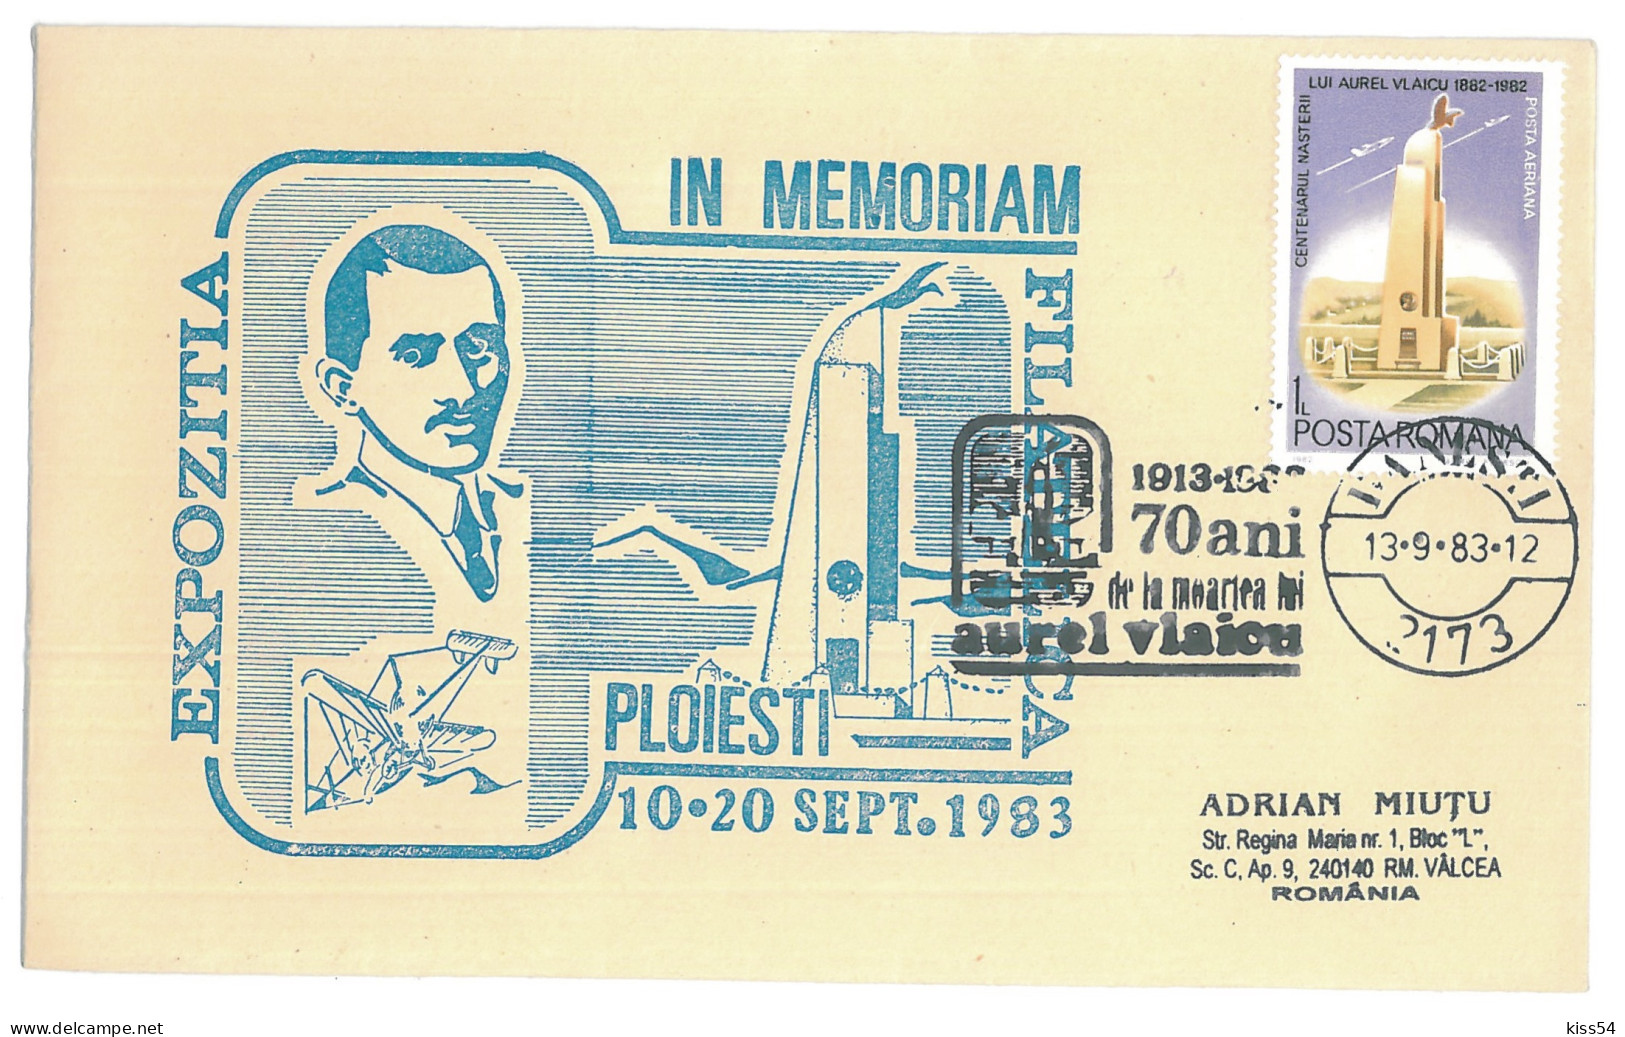 COV 38 - 290 AIRPLANE, Aurel Vlaicu, Romania - Cover - Used - 1983 - Briefe U. Dokumente